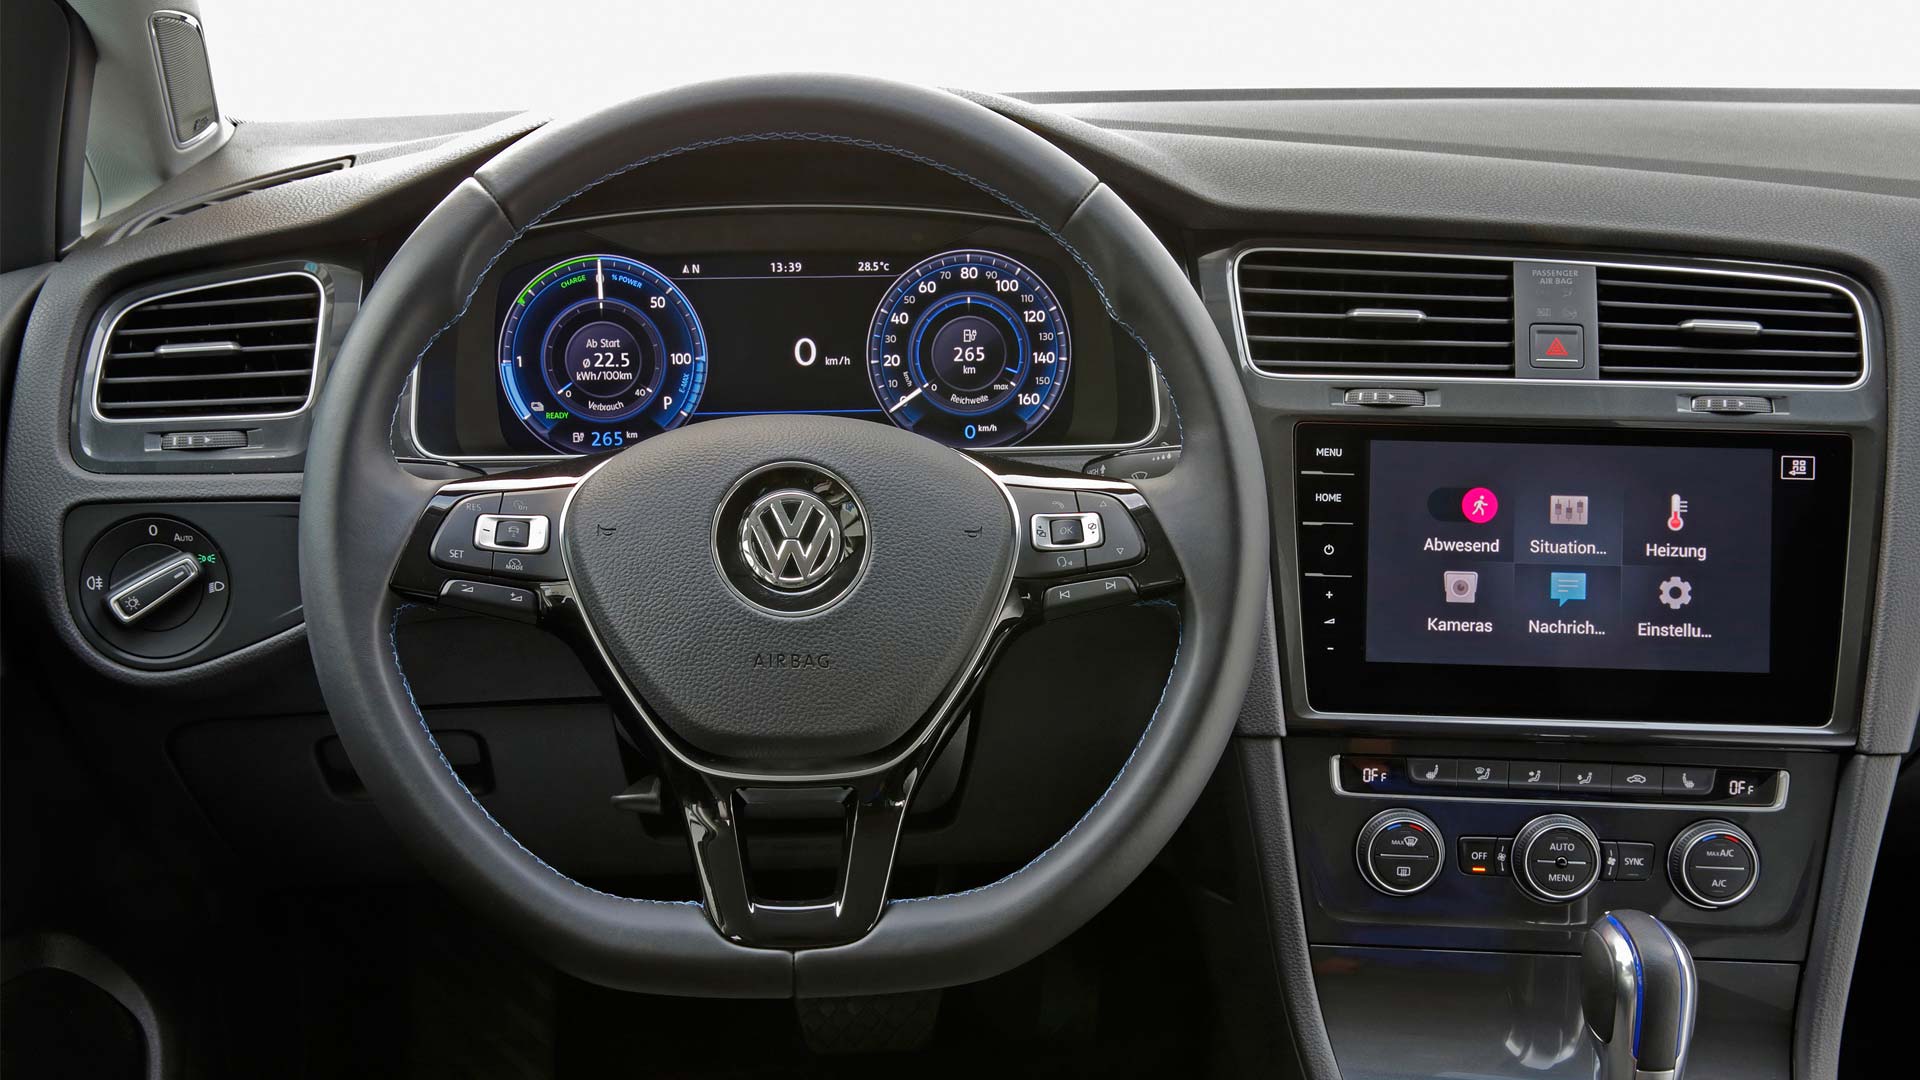 Volkswagen and Deutsche Telekom connecting home and automobile